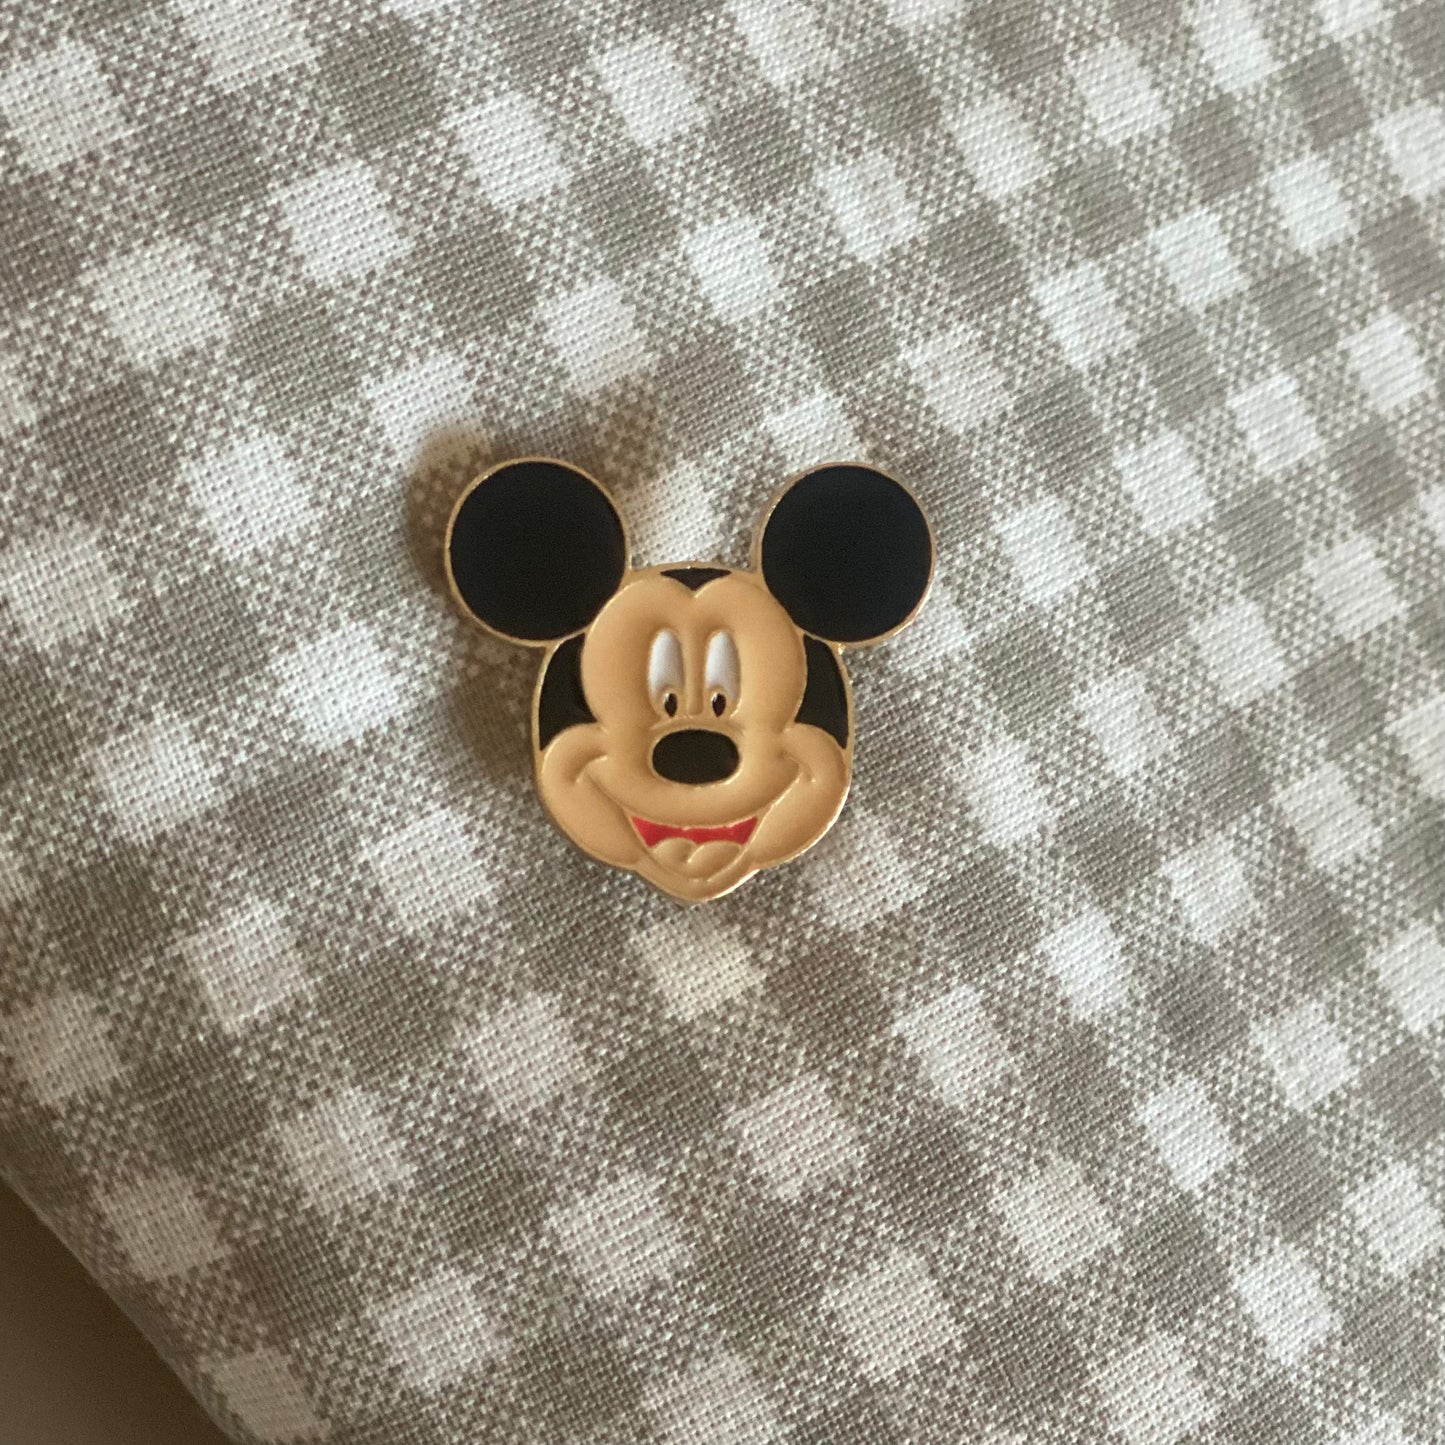 Mickey Mouse enamel pin